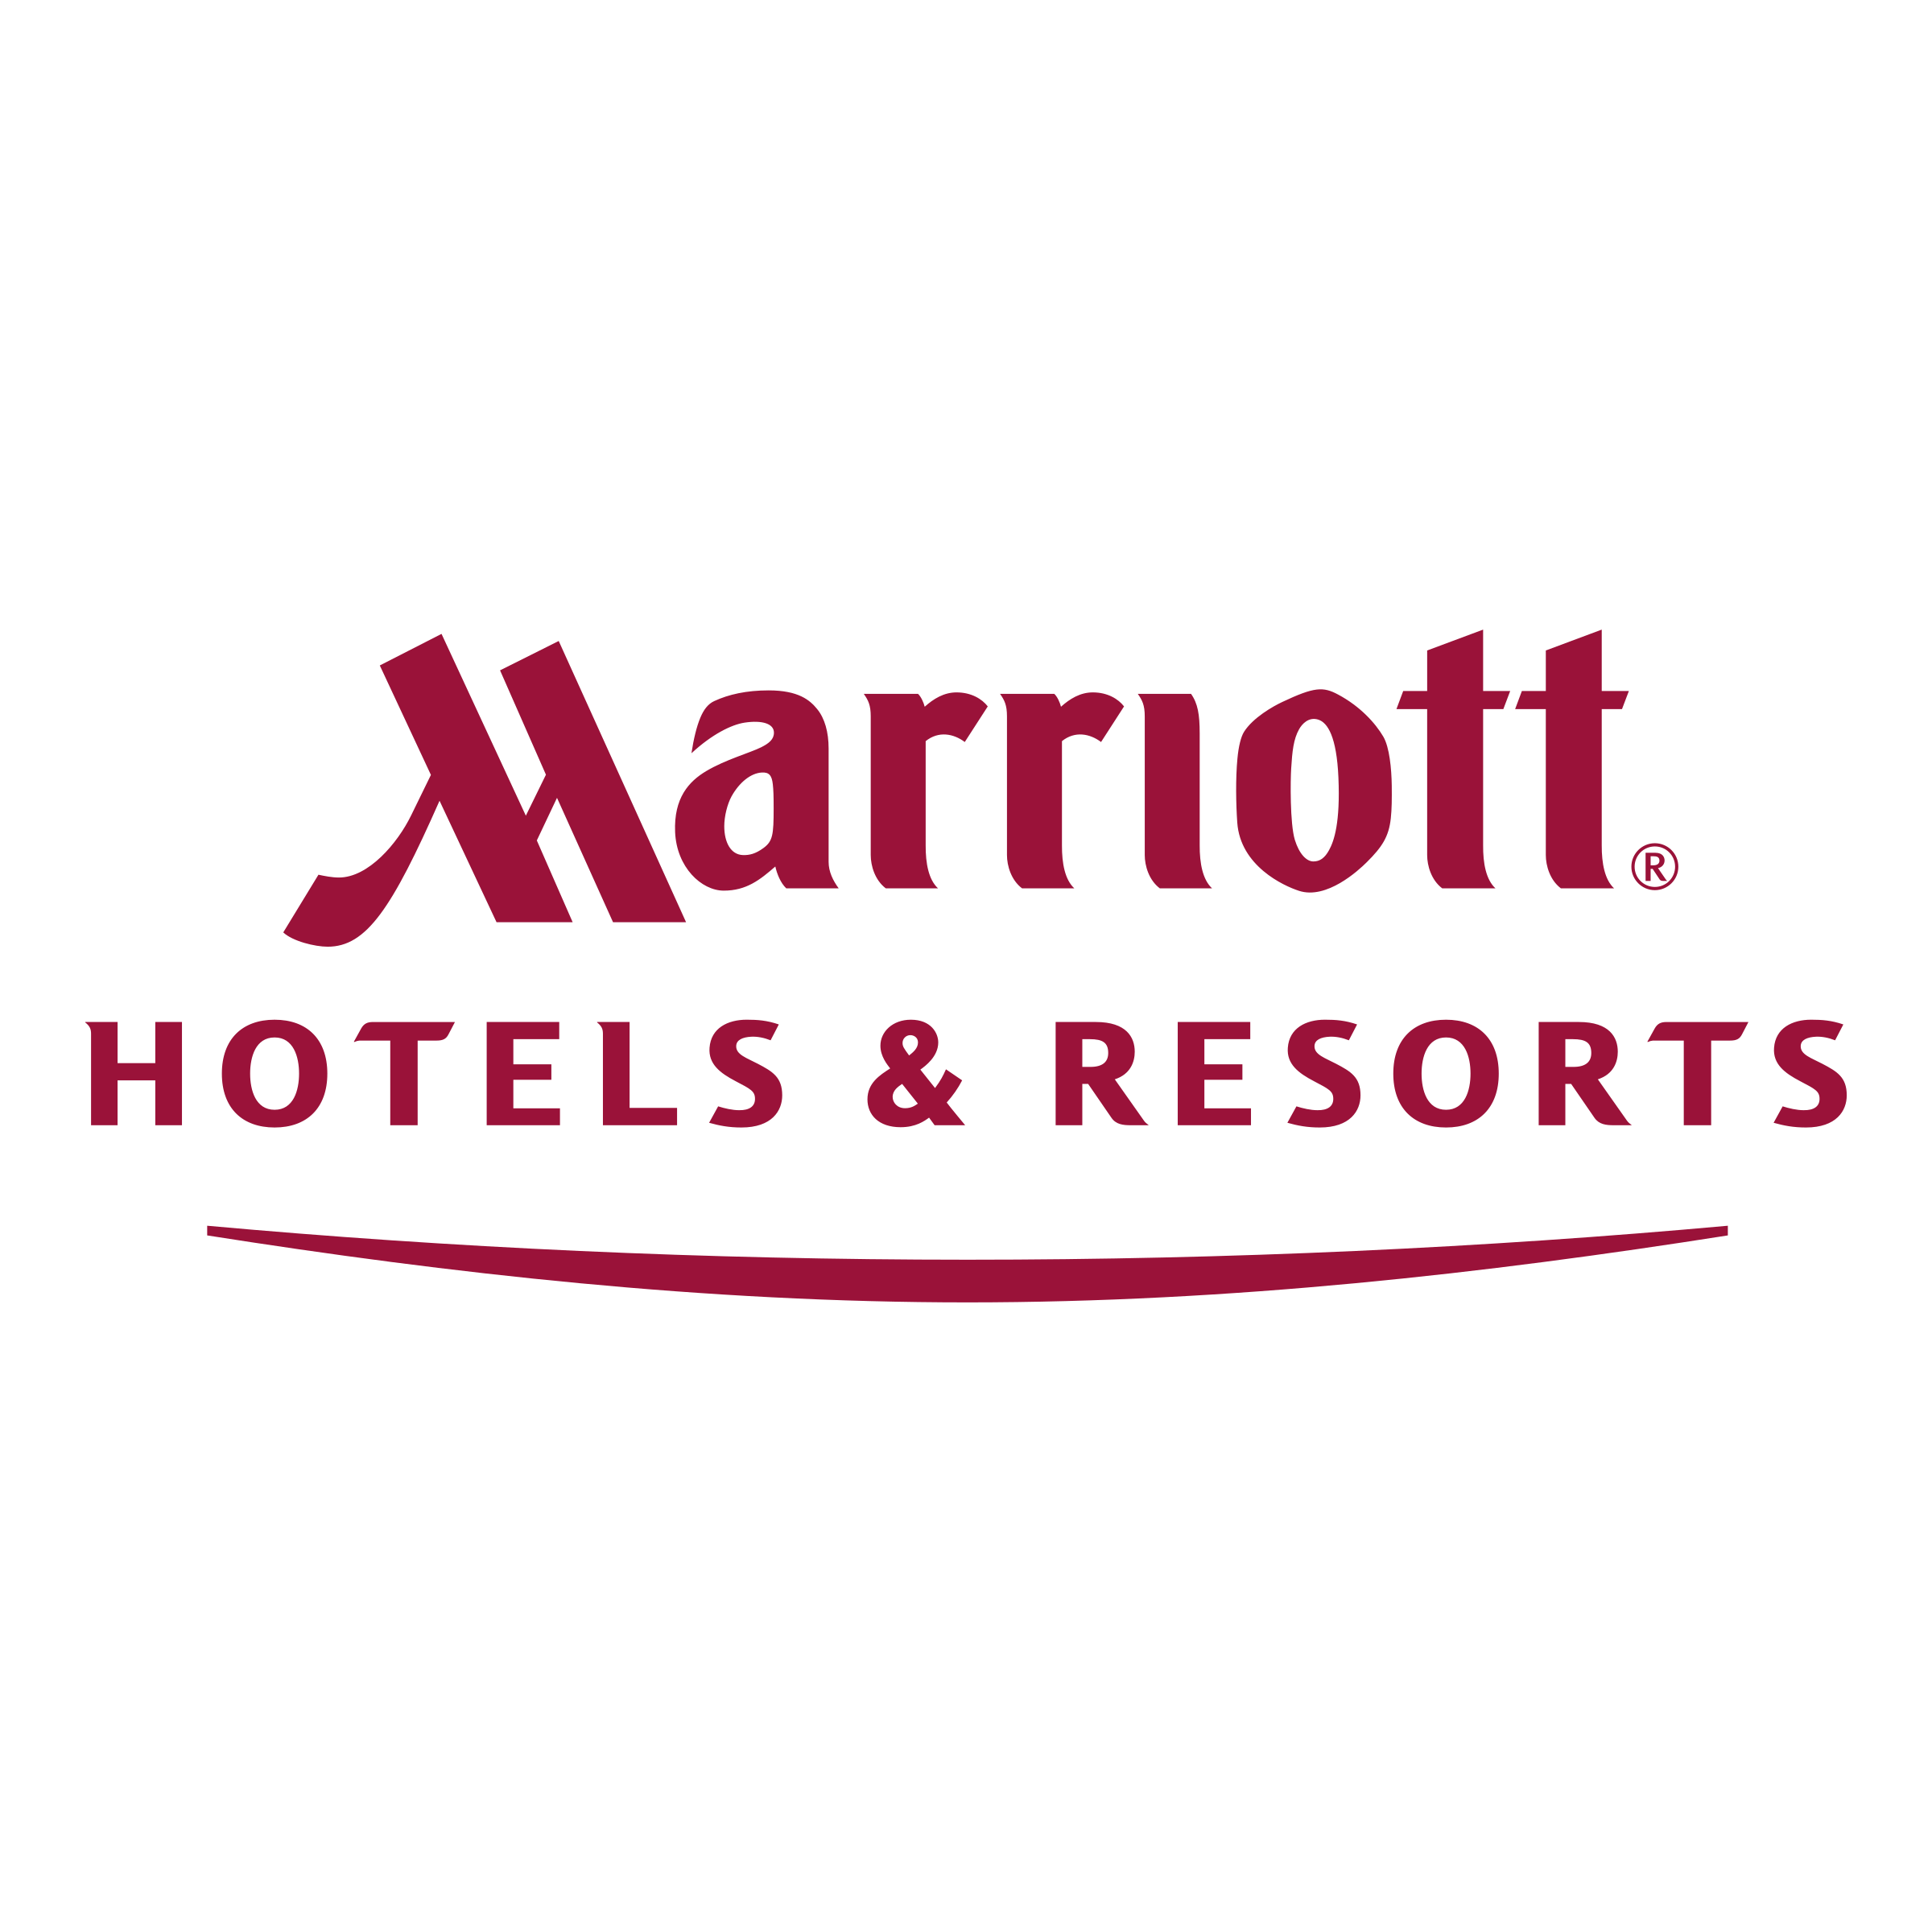 Marriott Hotels Logo - Marriott Hotels & Resorts Logo PNG Transparent & SVG Vector ...